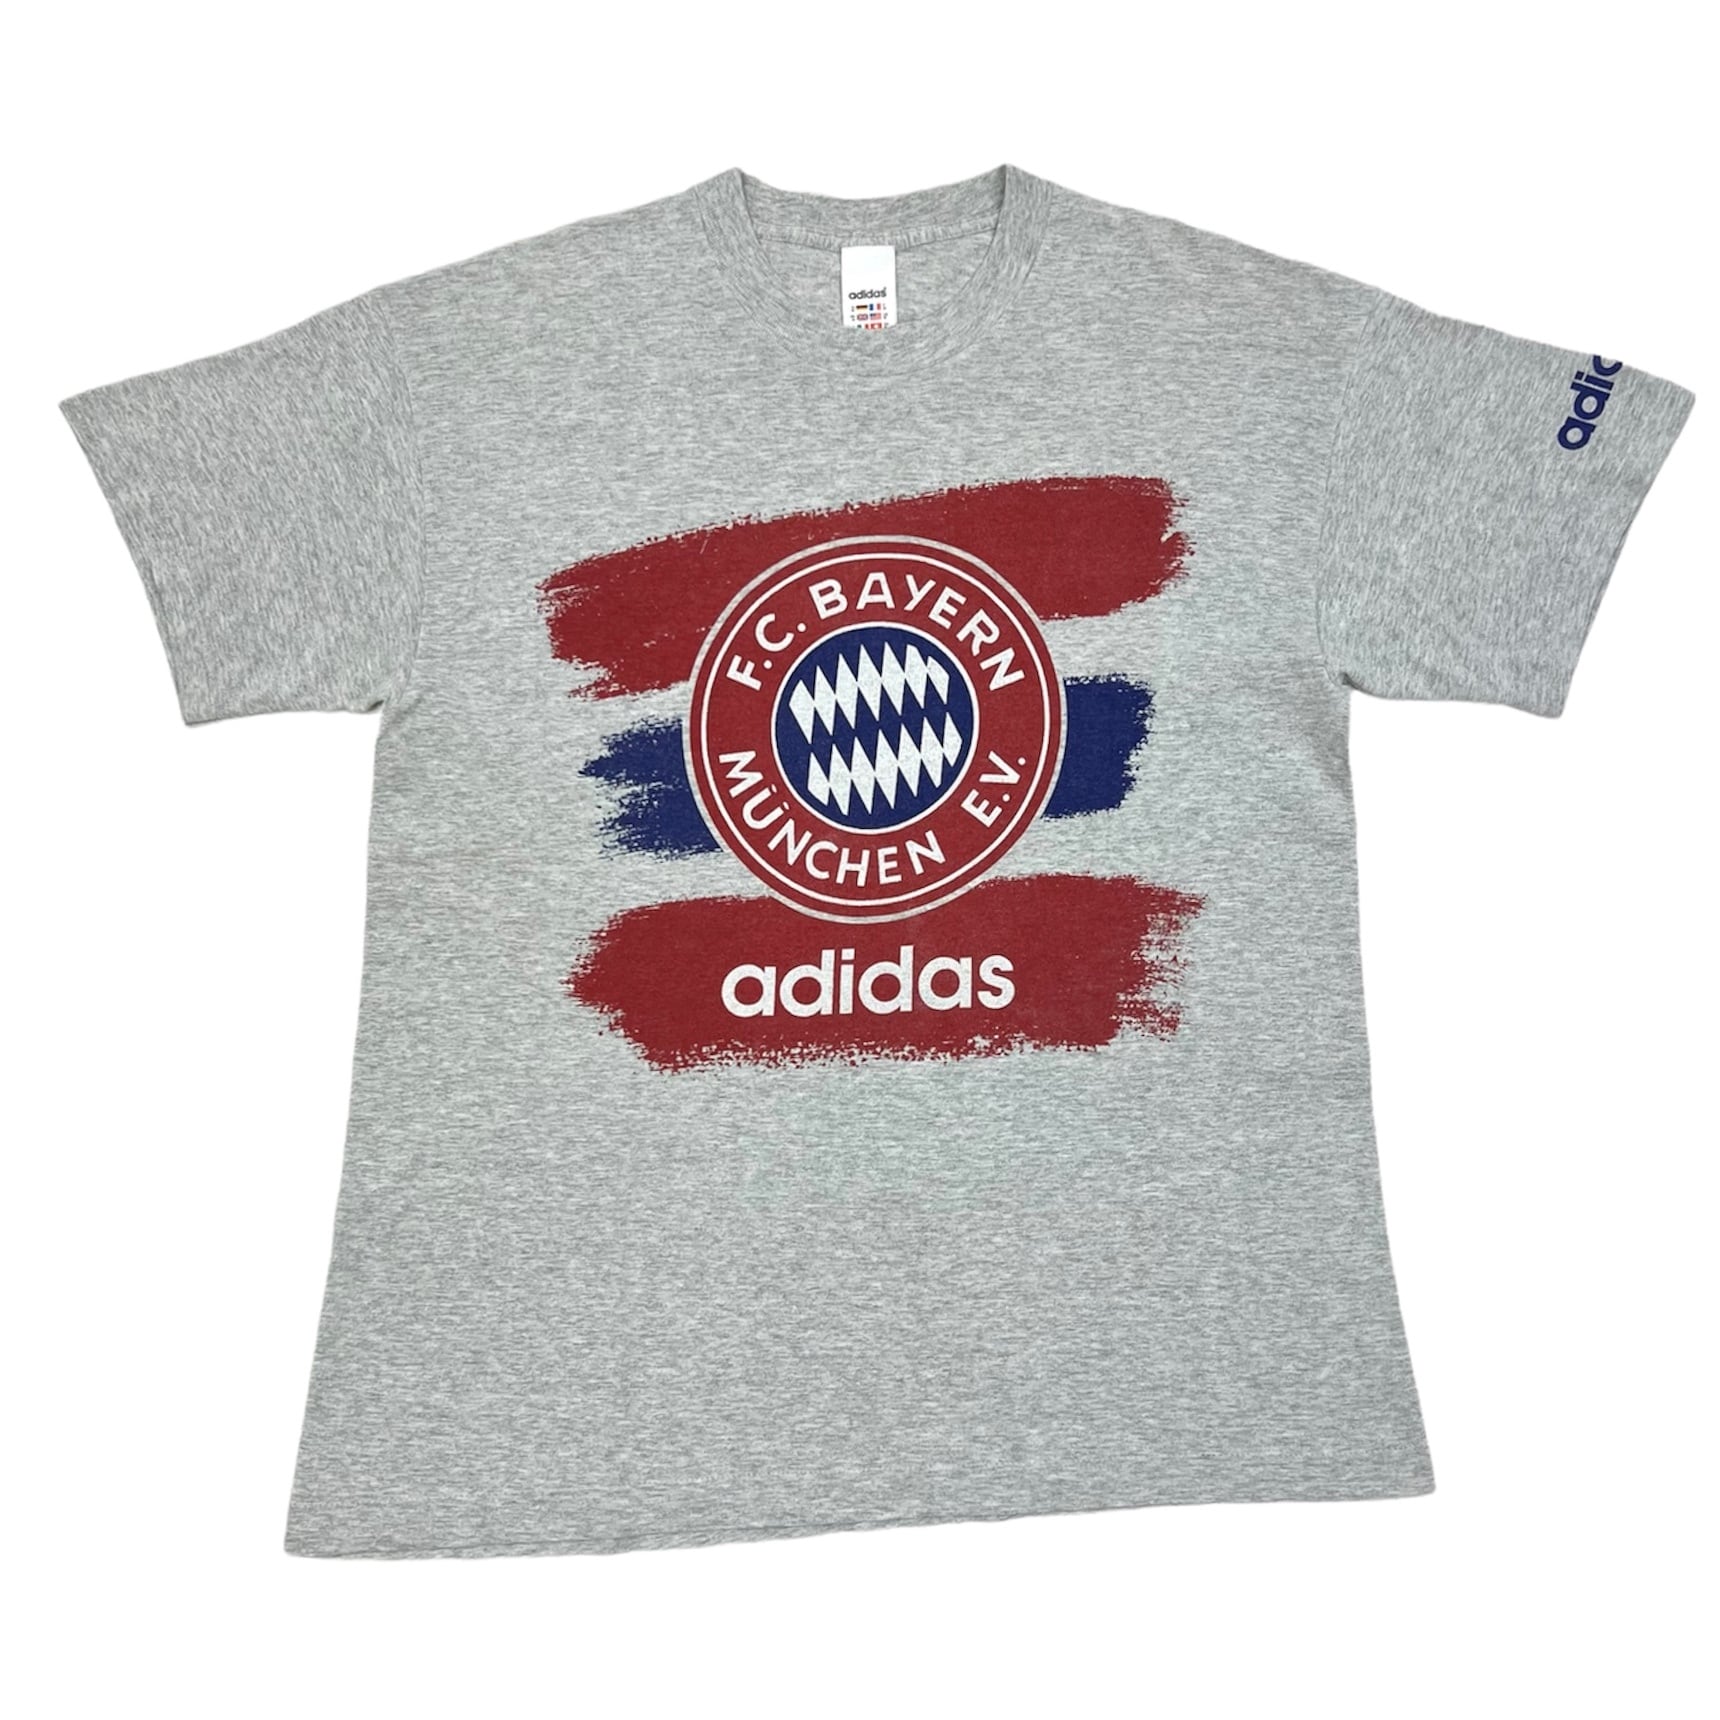 1020. 1990's adidas tee FC Bayern München グレー プリント Tシャツ